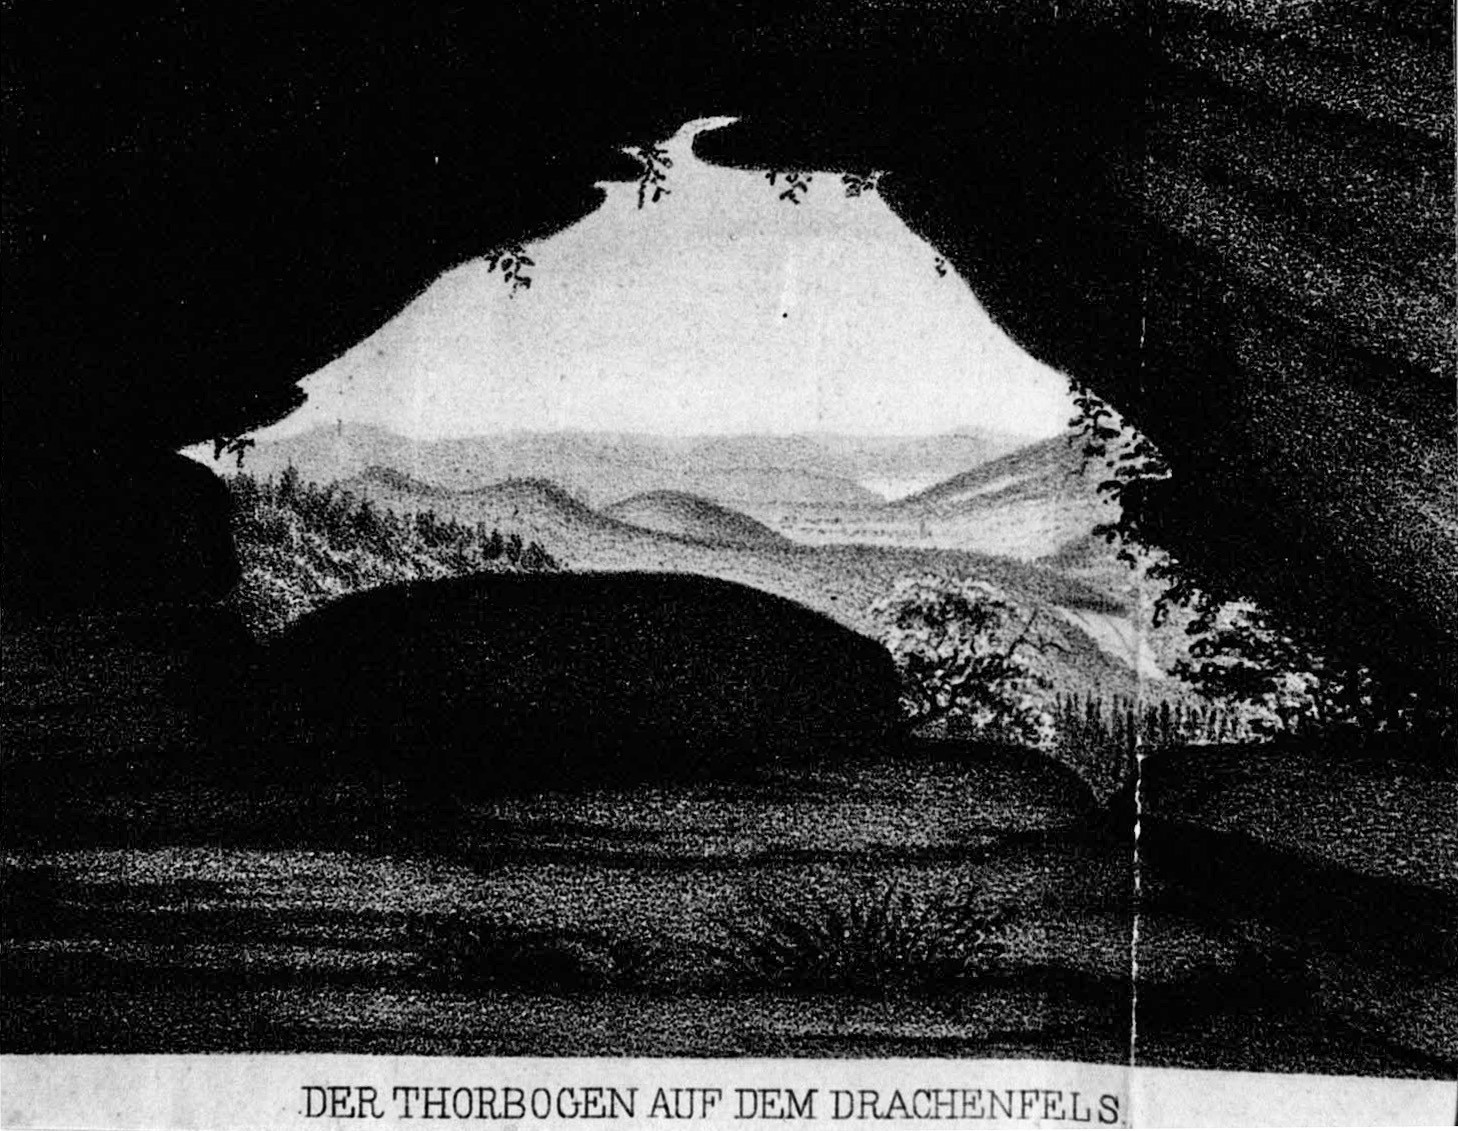 Foto-Sammlung Adolf Krapp, Ordner 13: Drachenfels, 1857 (Museumsgesellschaft Bad Dürkheim e.V. CC BY-NC-SA)